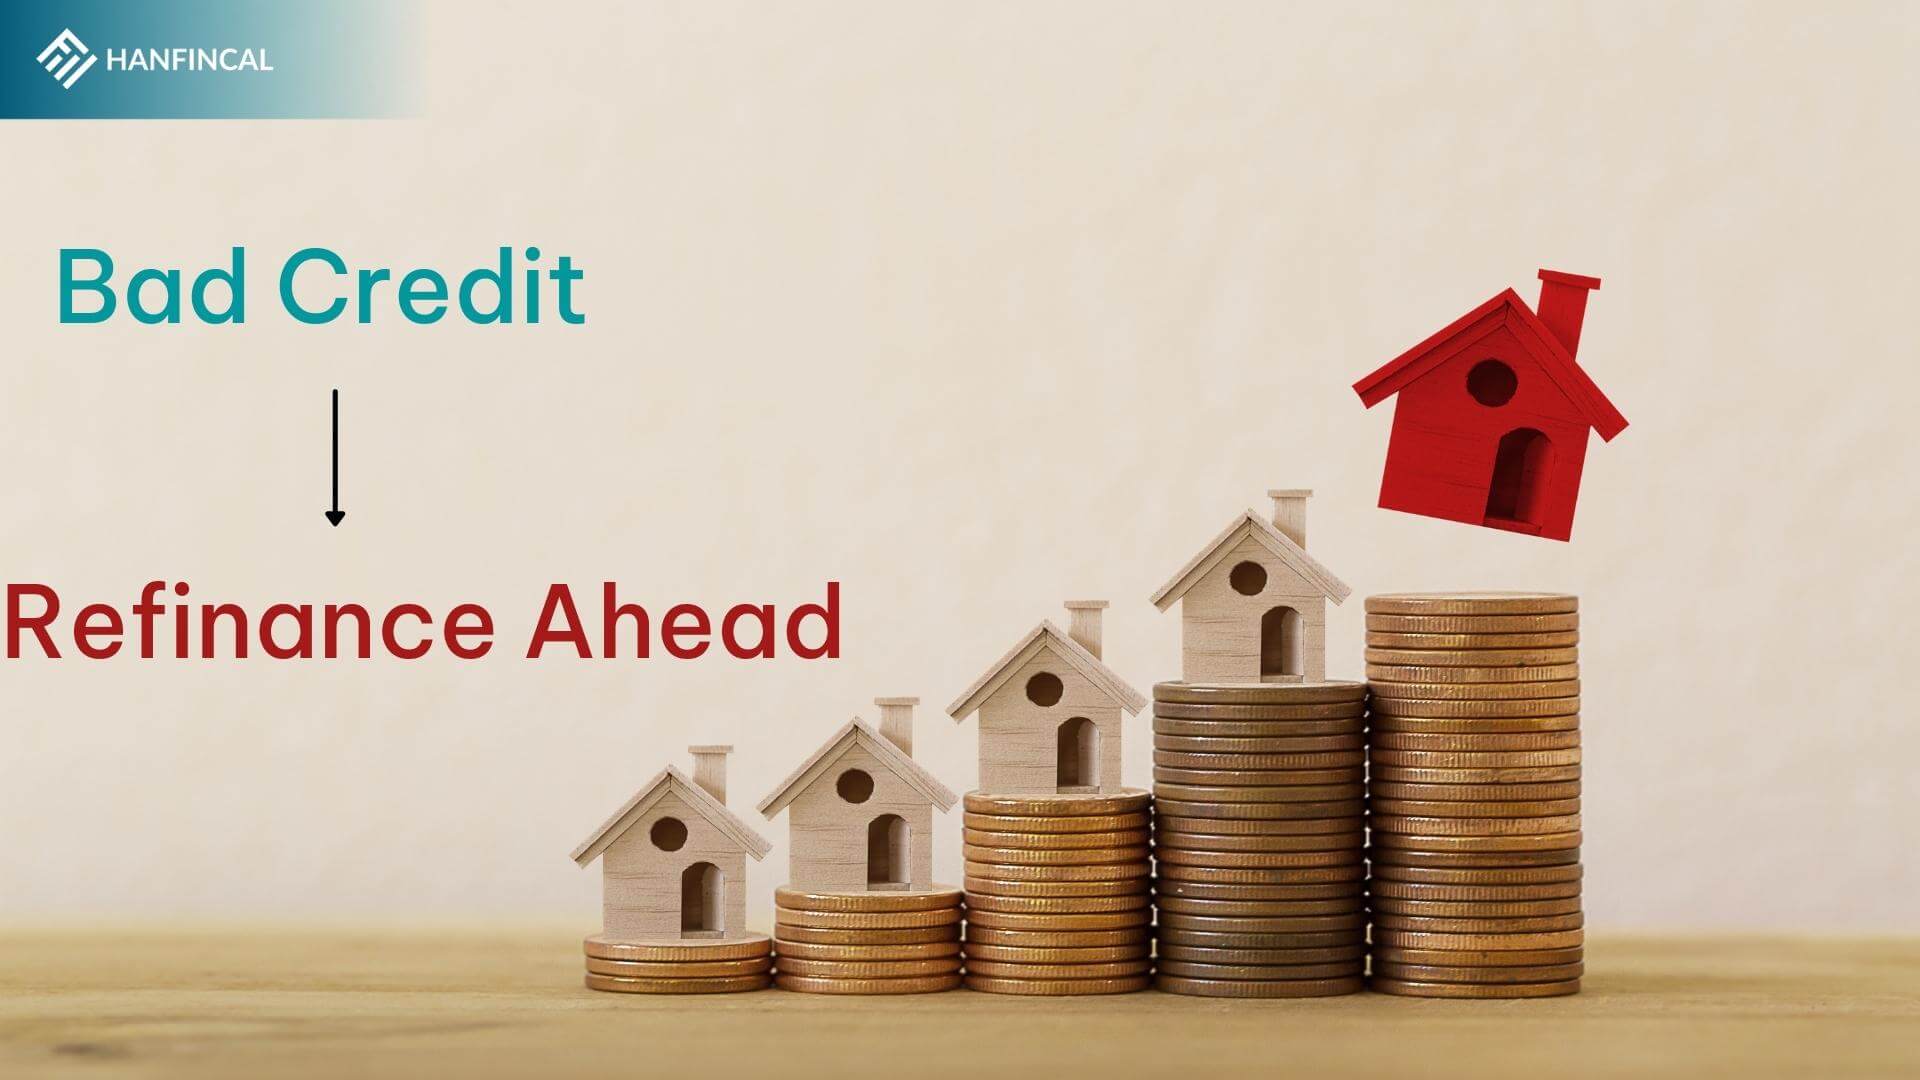 Refinance Ahead With Bad Credit